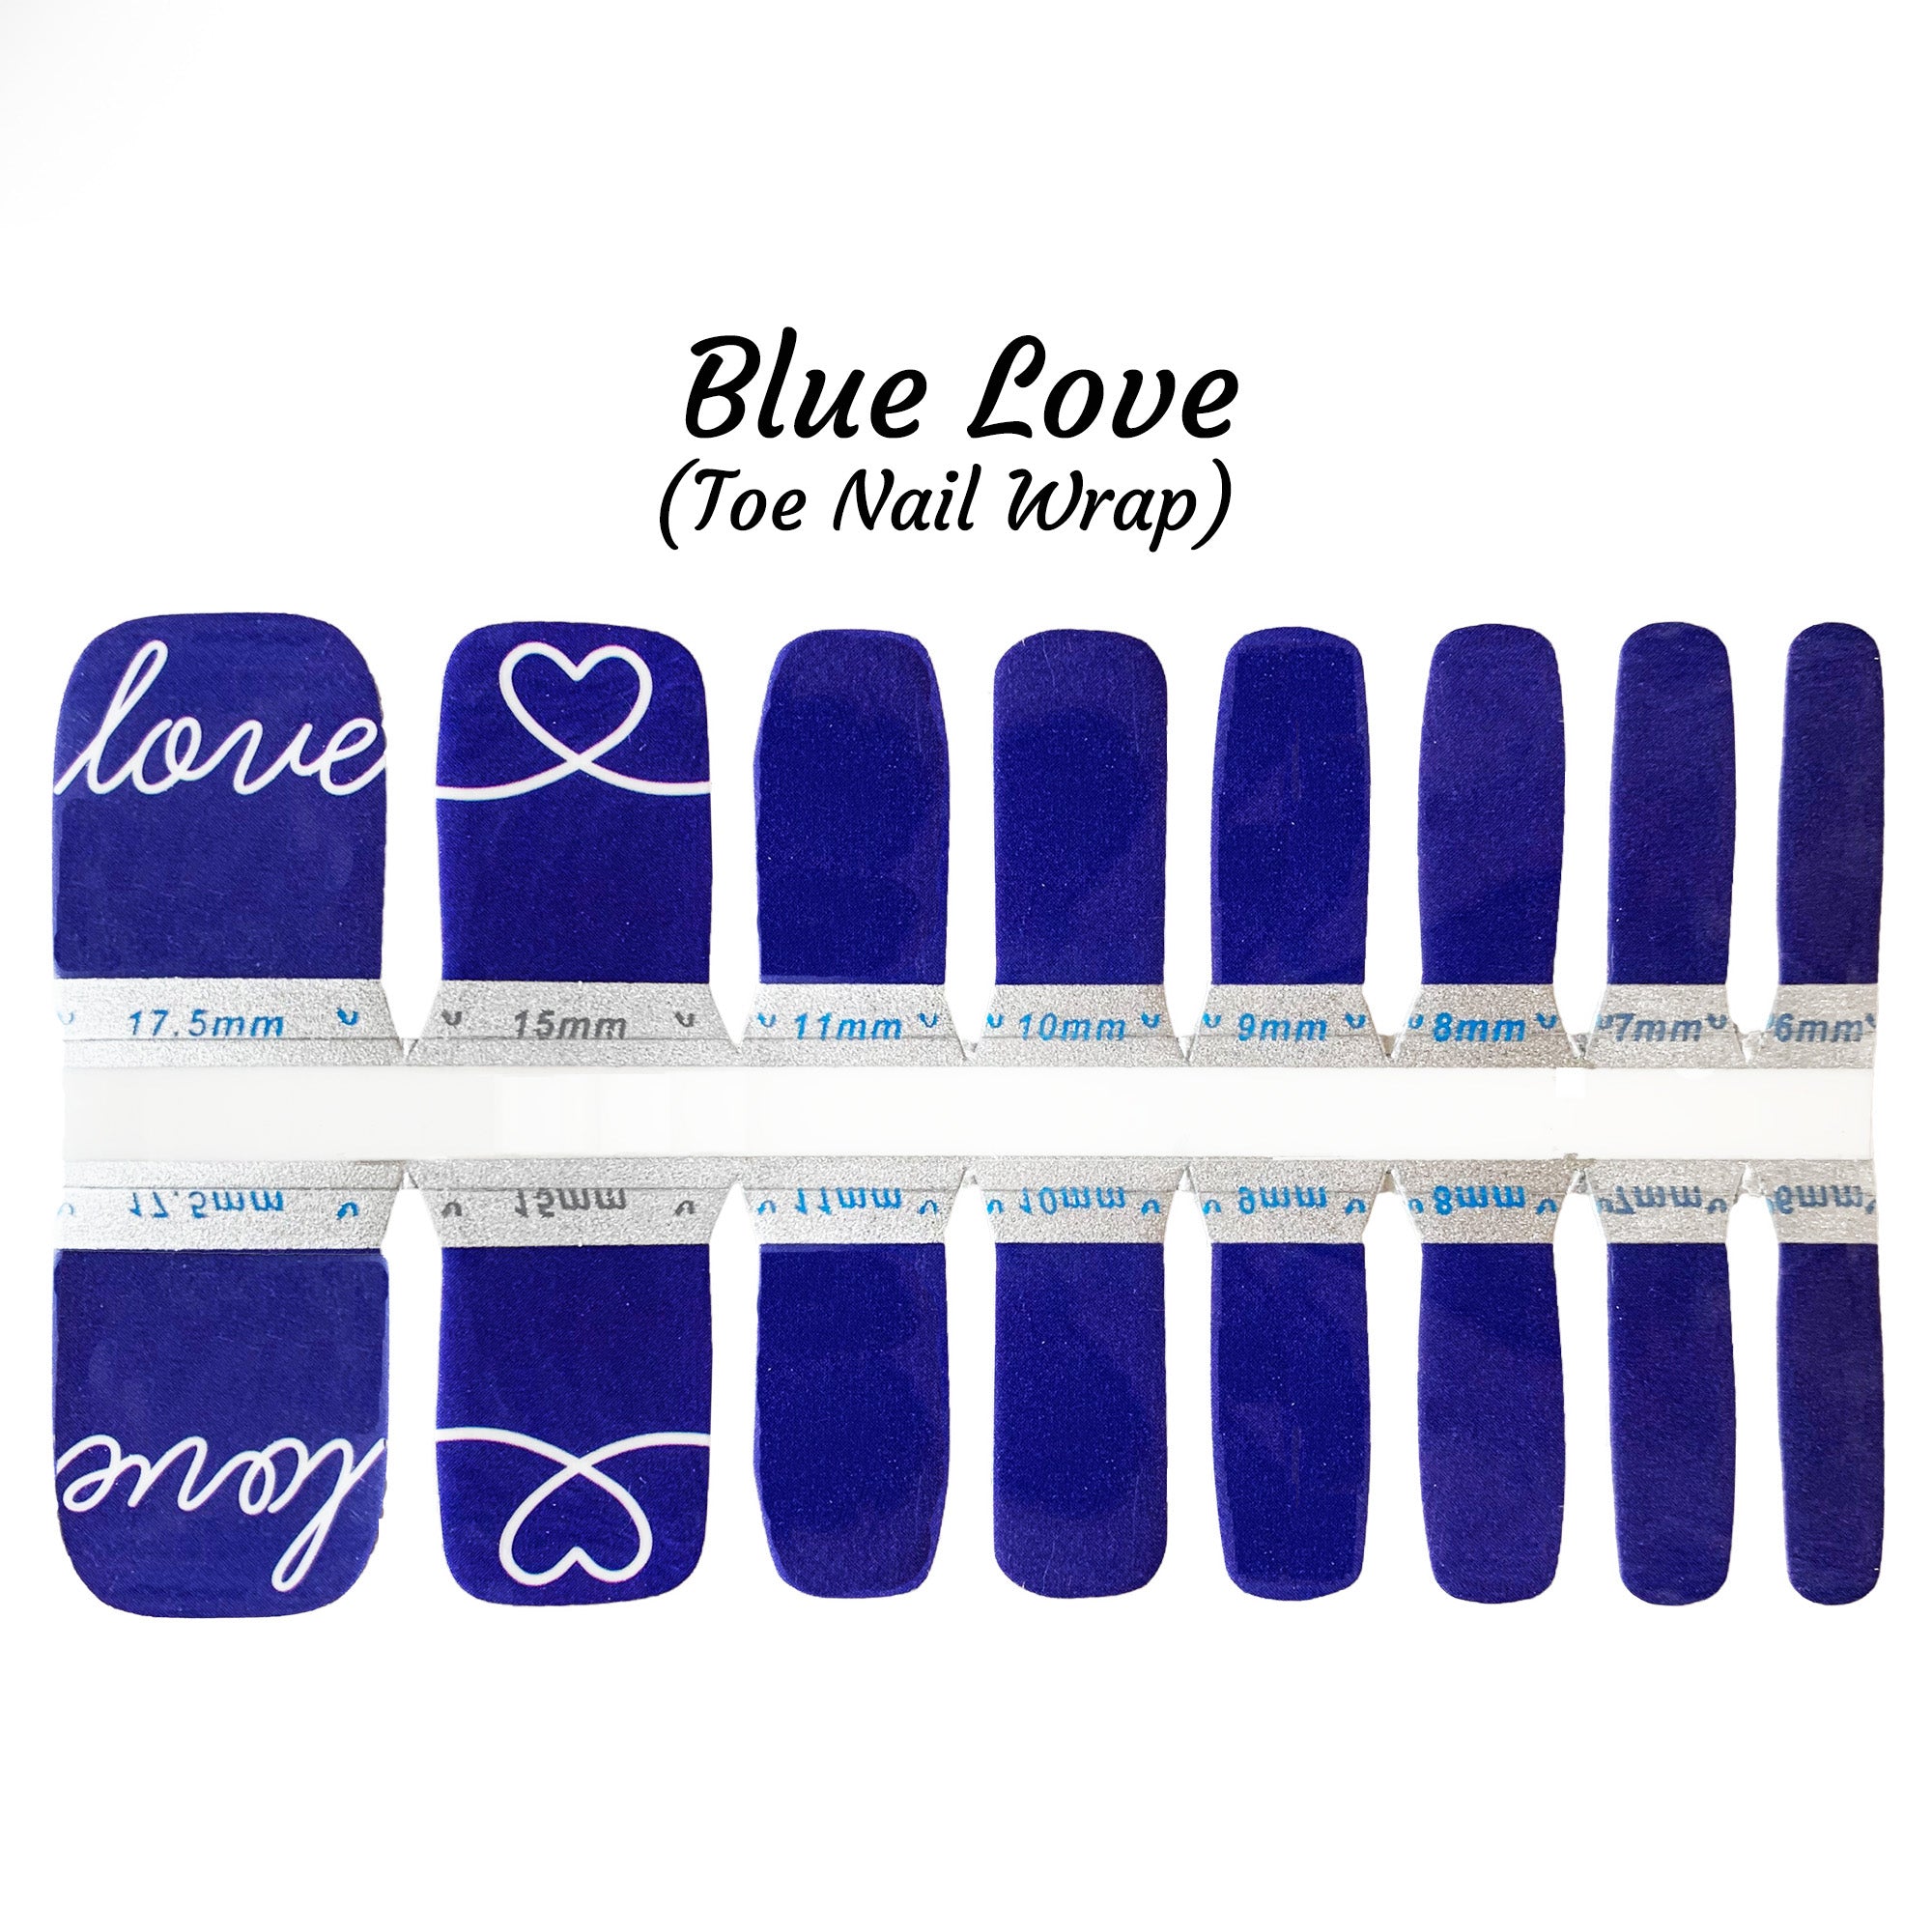 Blue Love Toe